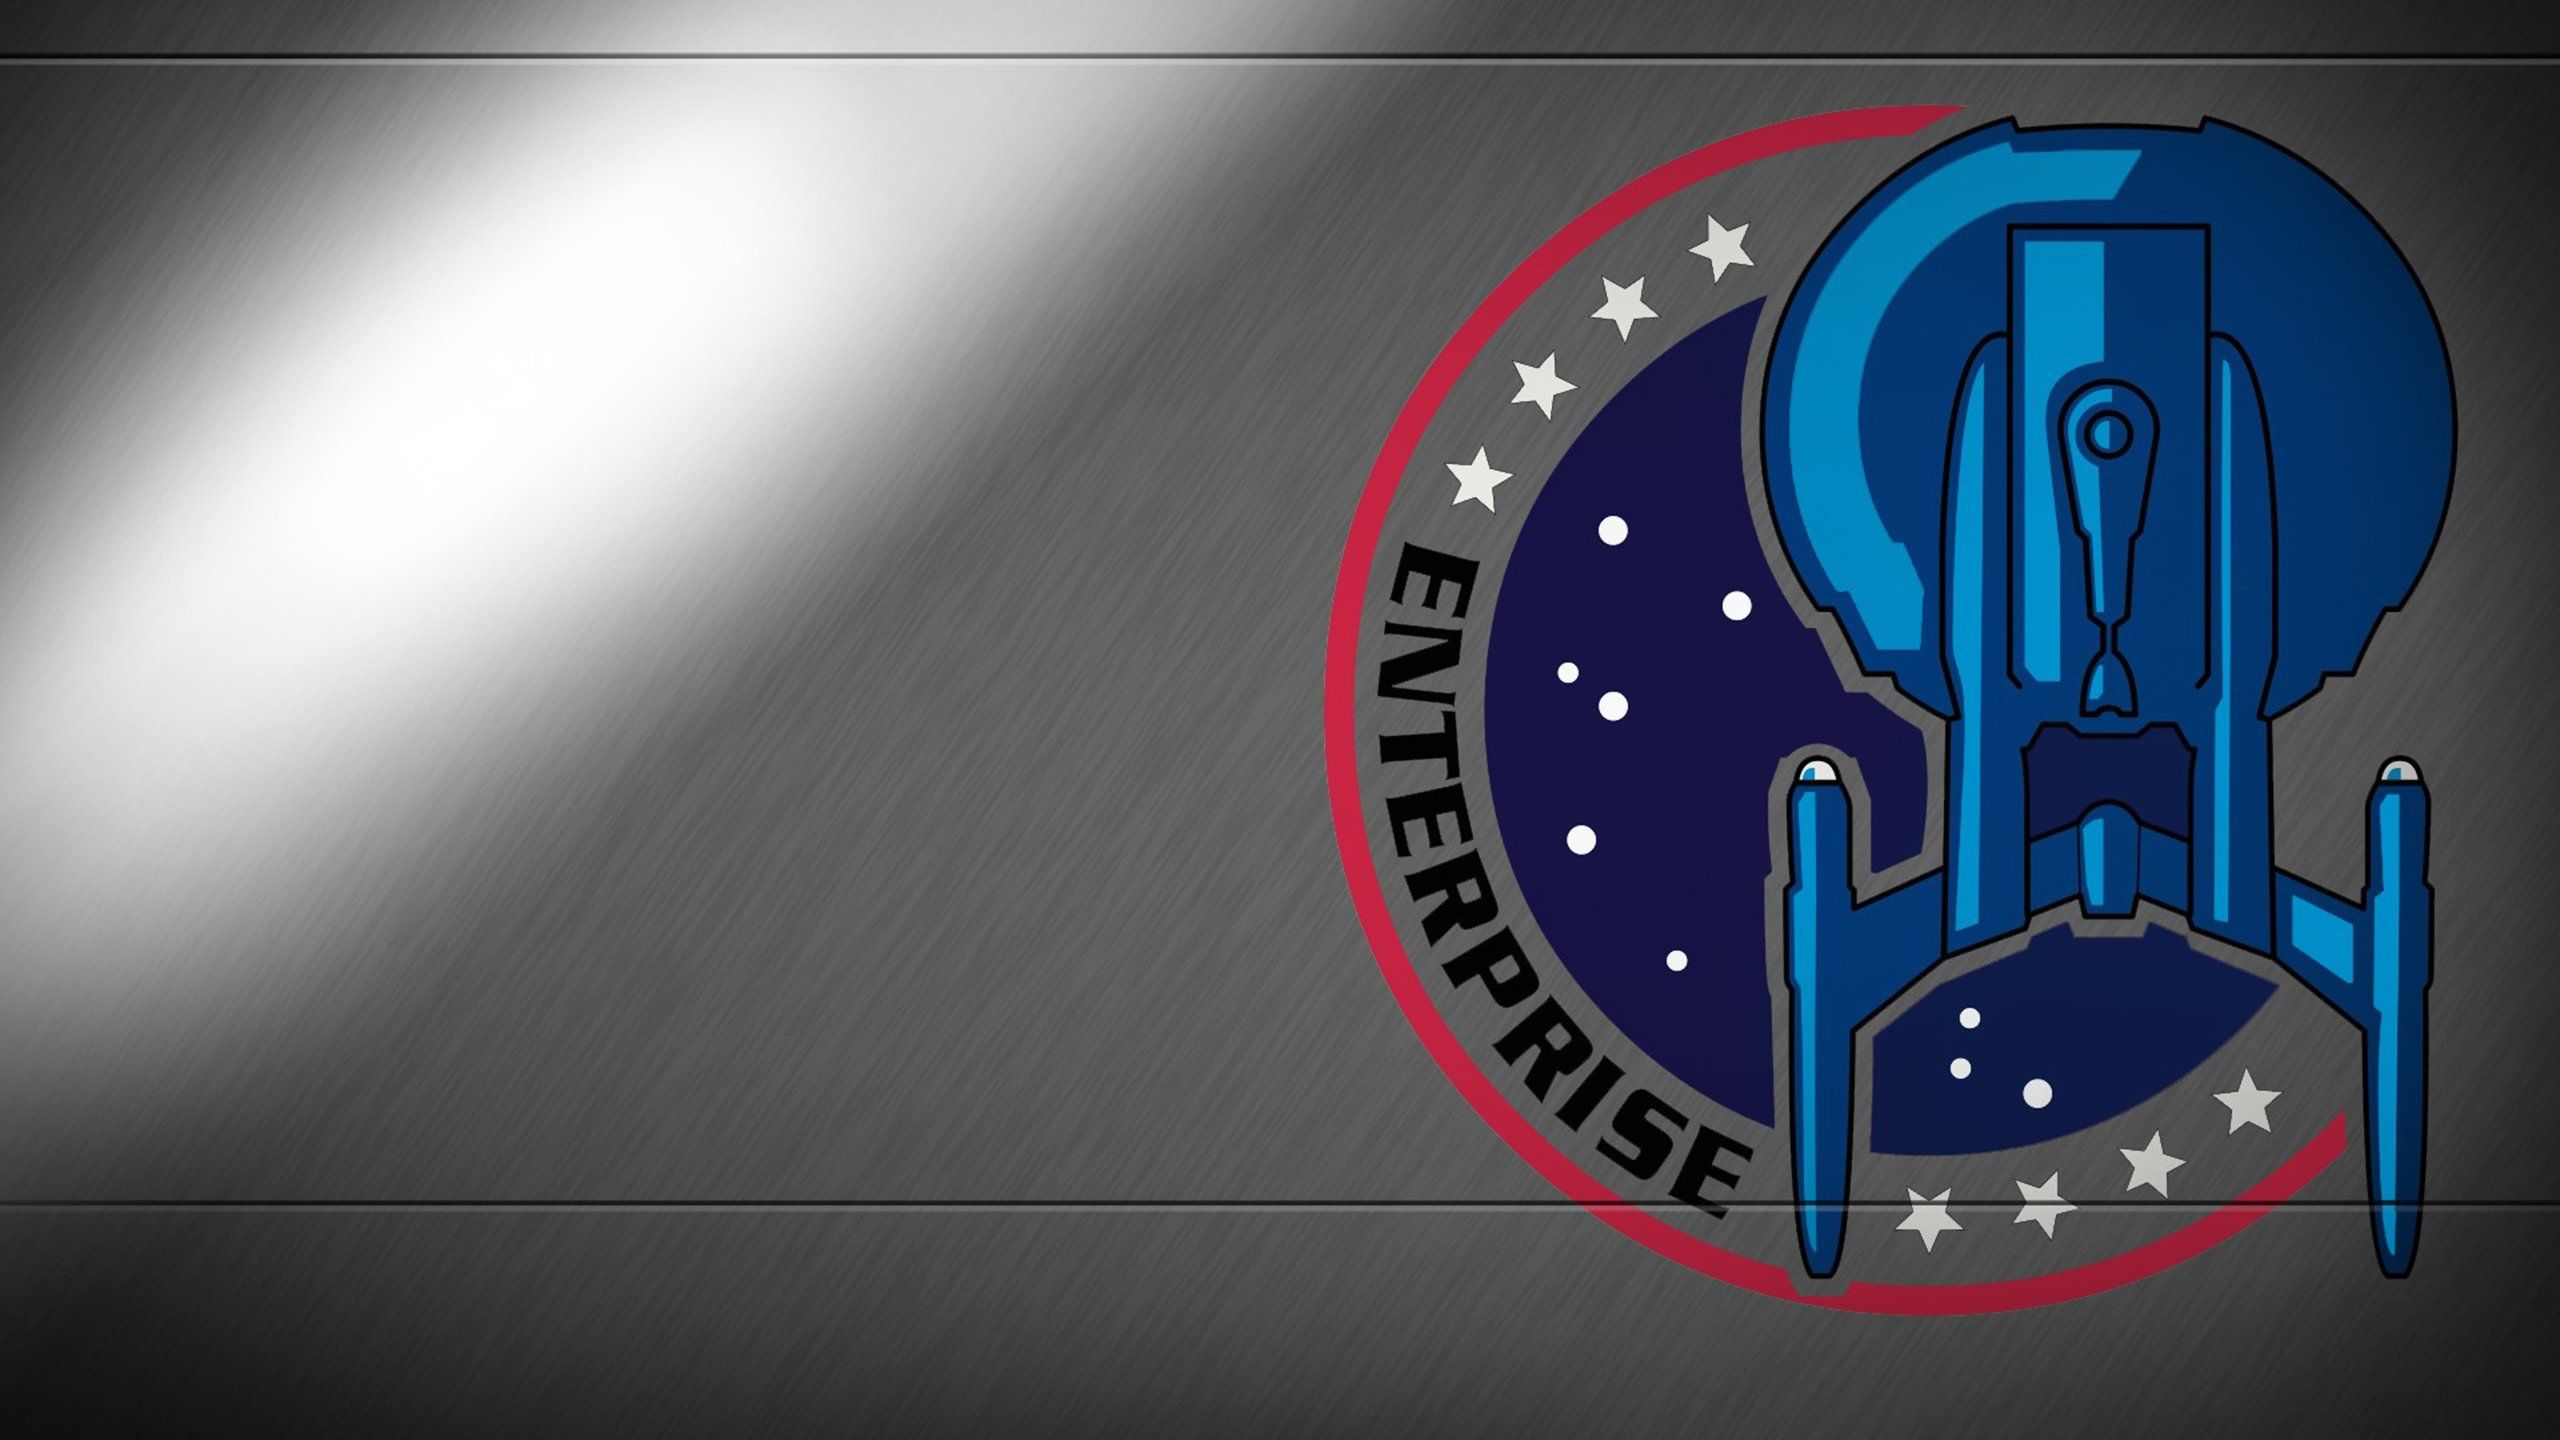 Star Trek Enterprise logo wallpaper .wallpaperup.com